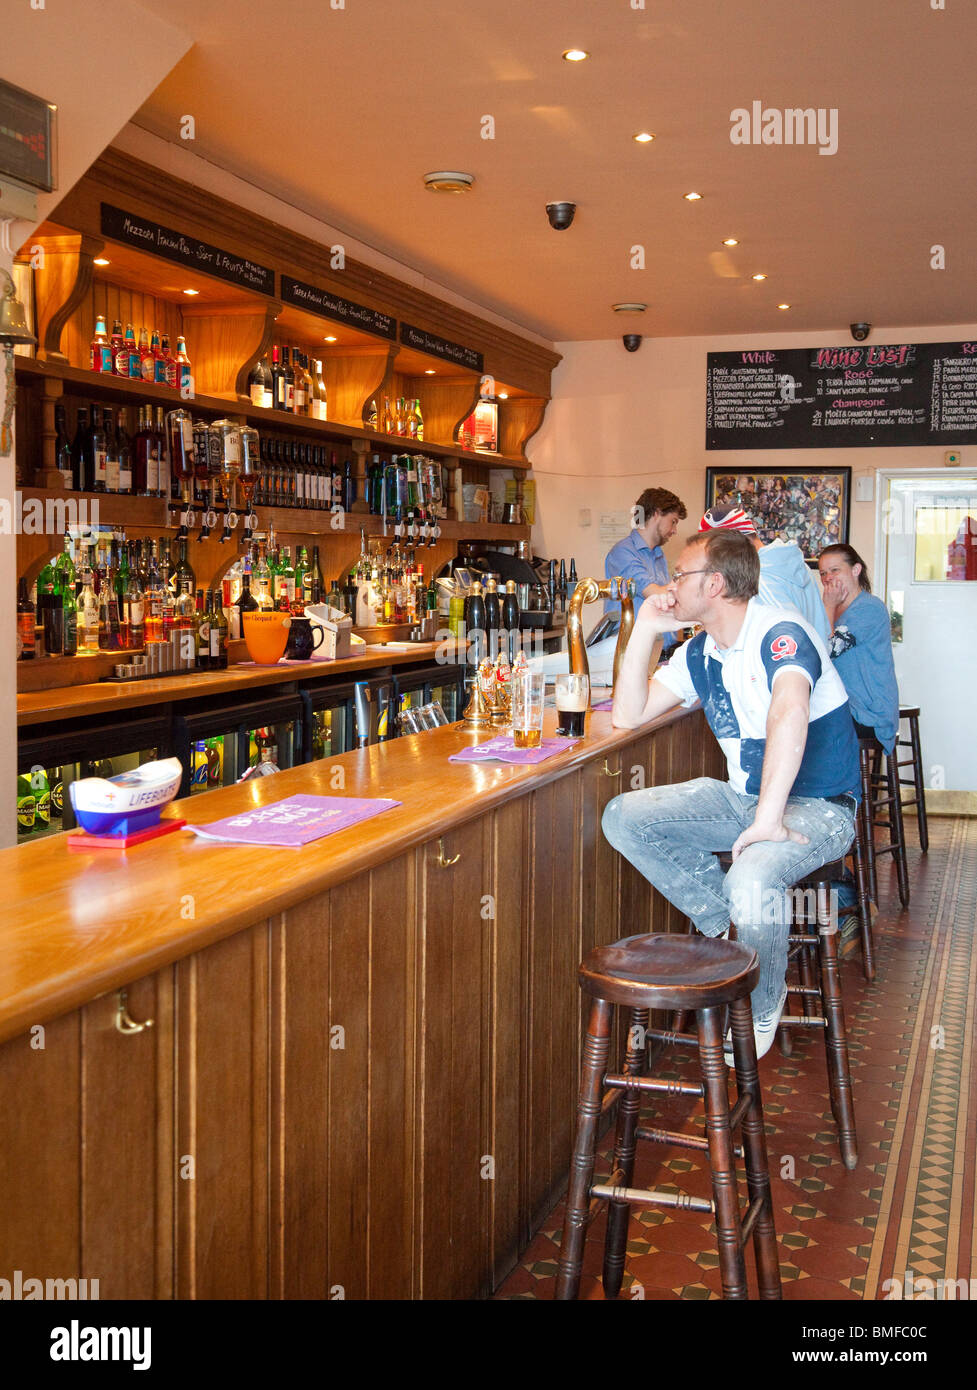 inside the Lock & barrel pub in Frinton on Sea Stock Photo